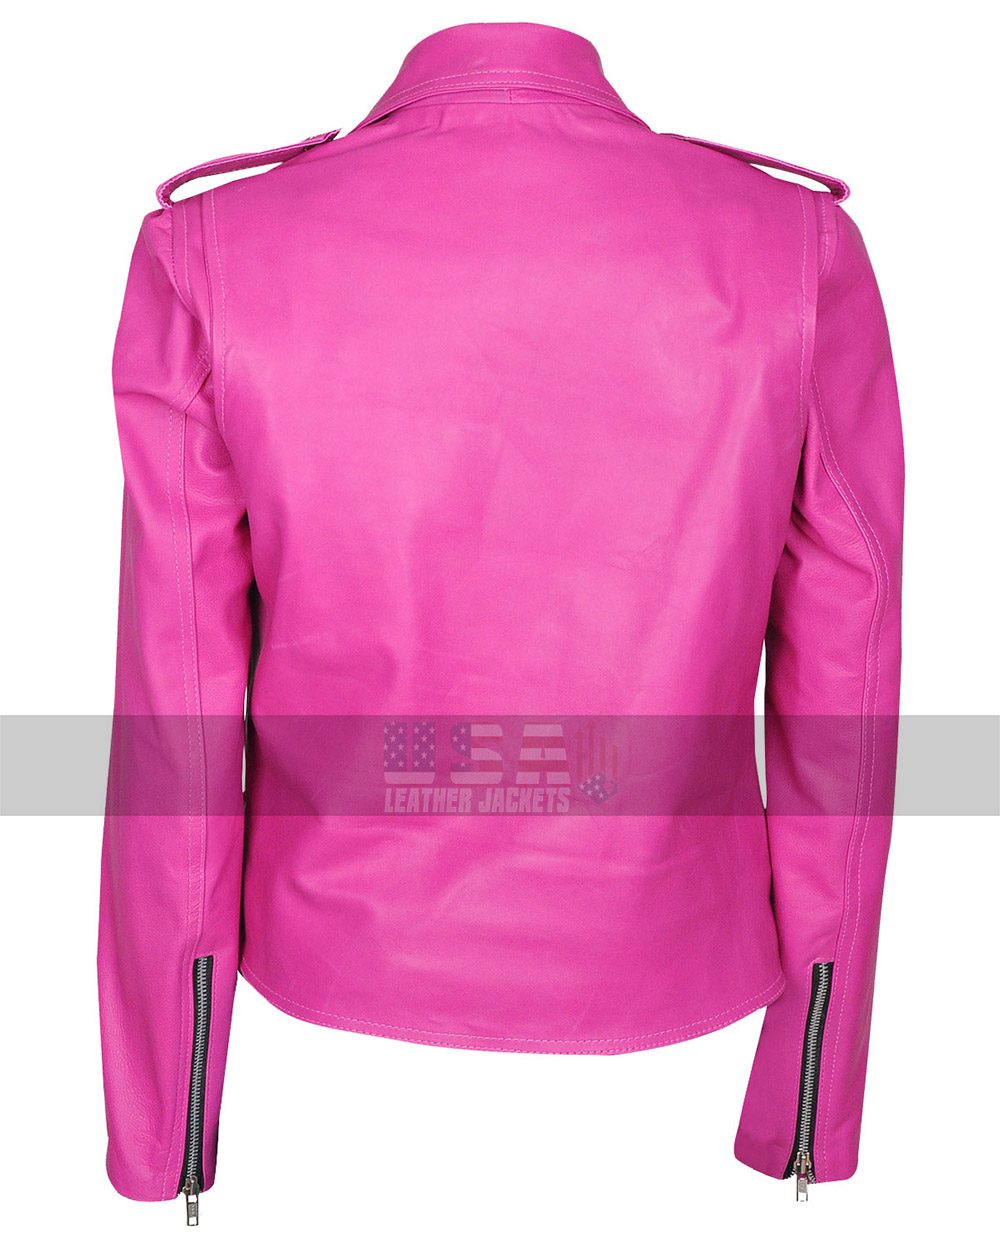 Hot Pink Brando Jessica Alba Jacket